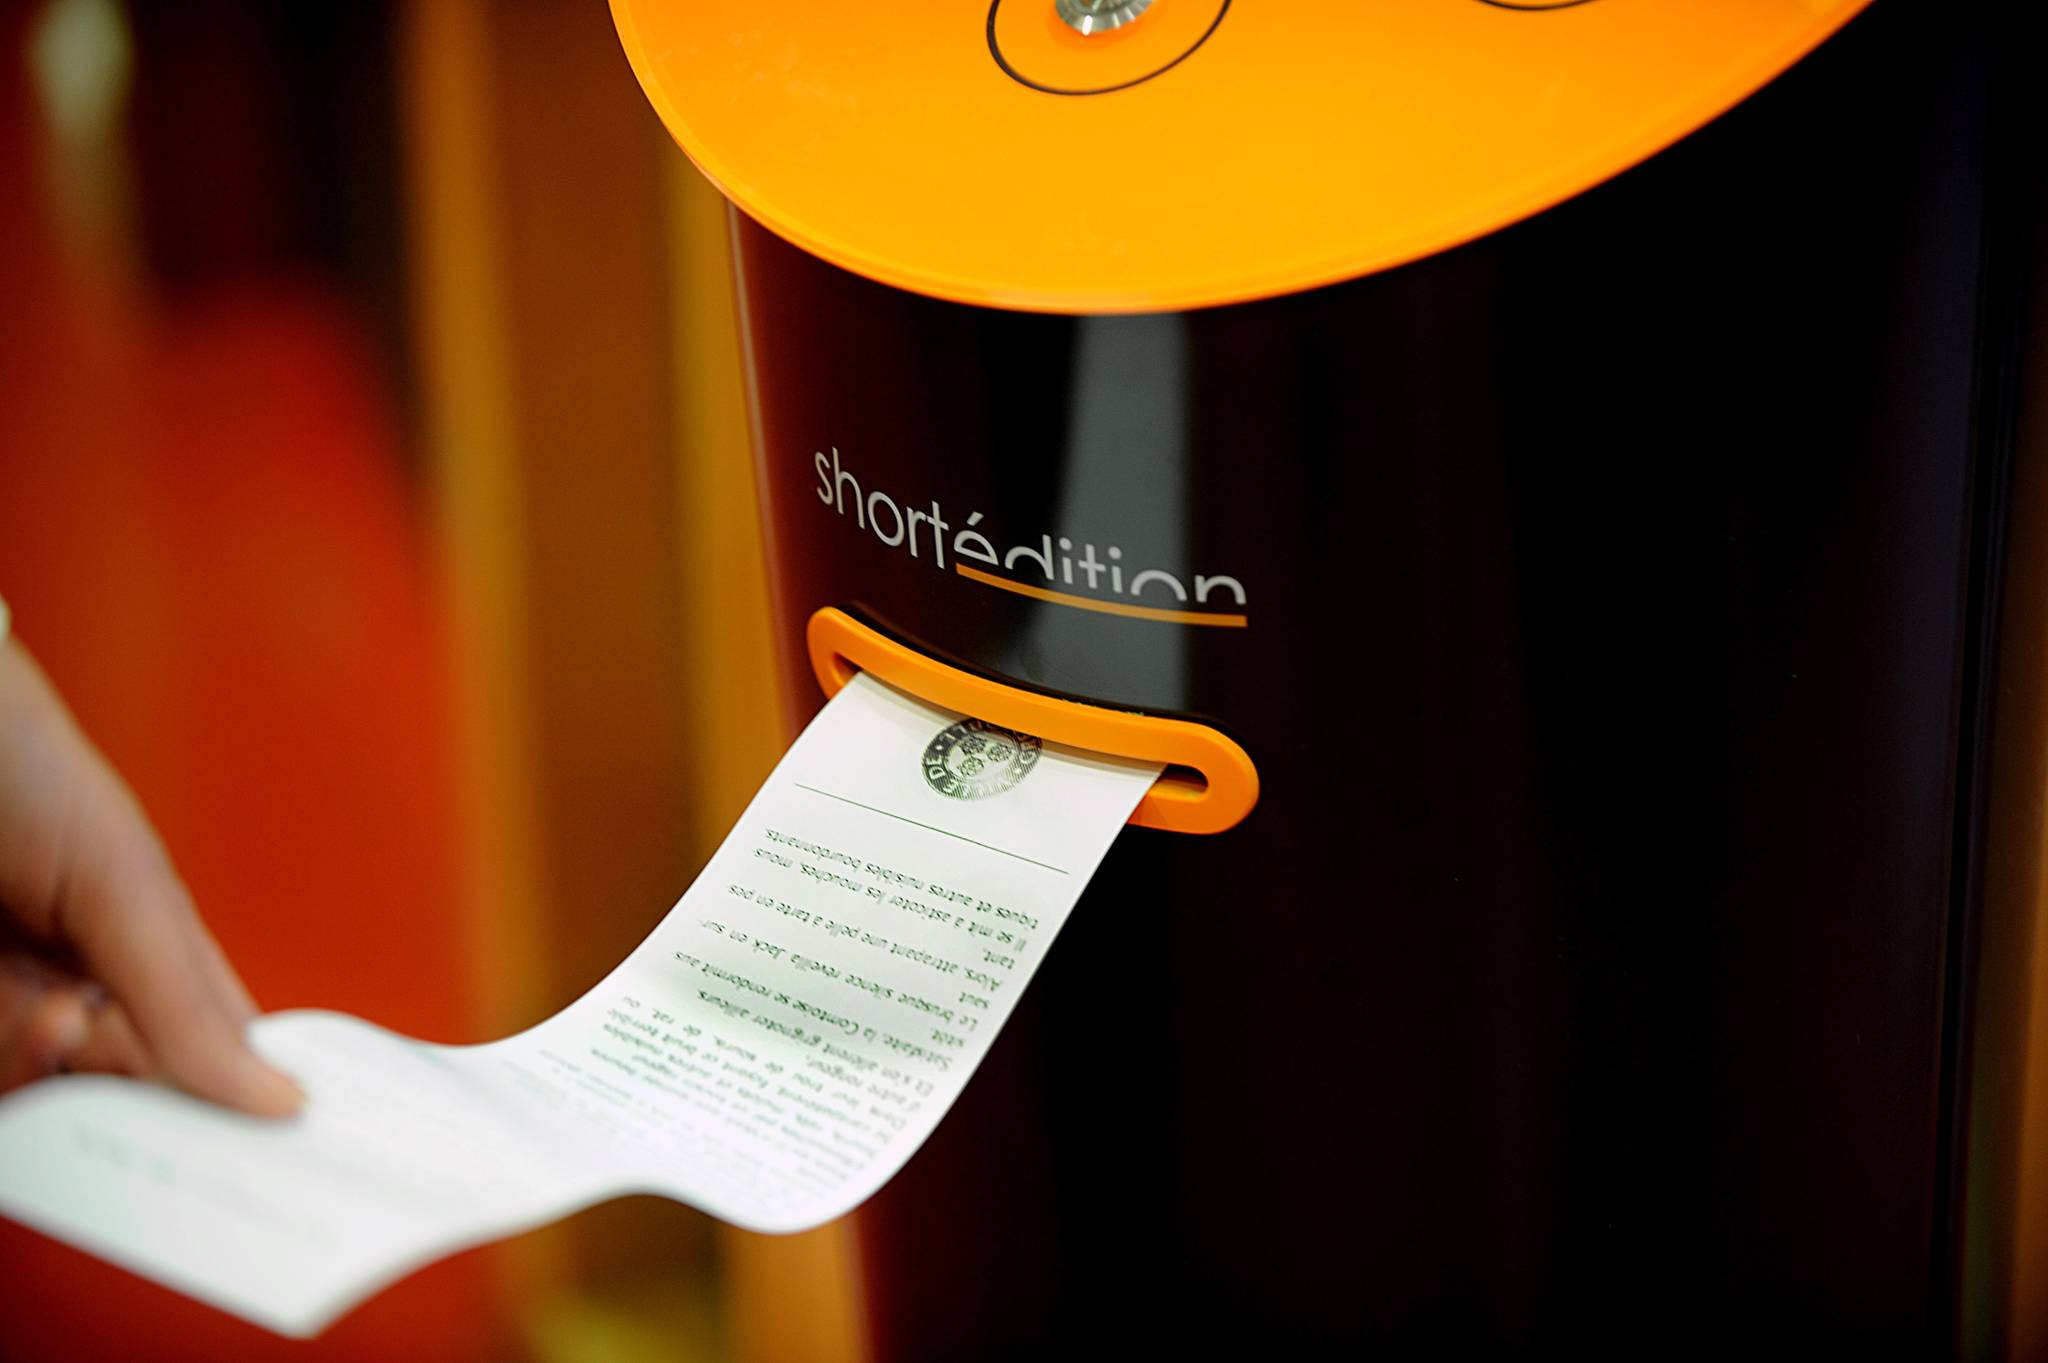 Vending machines in France dispense short stories